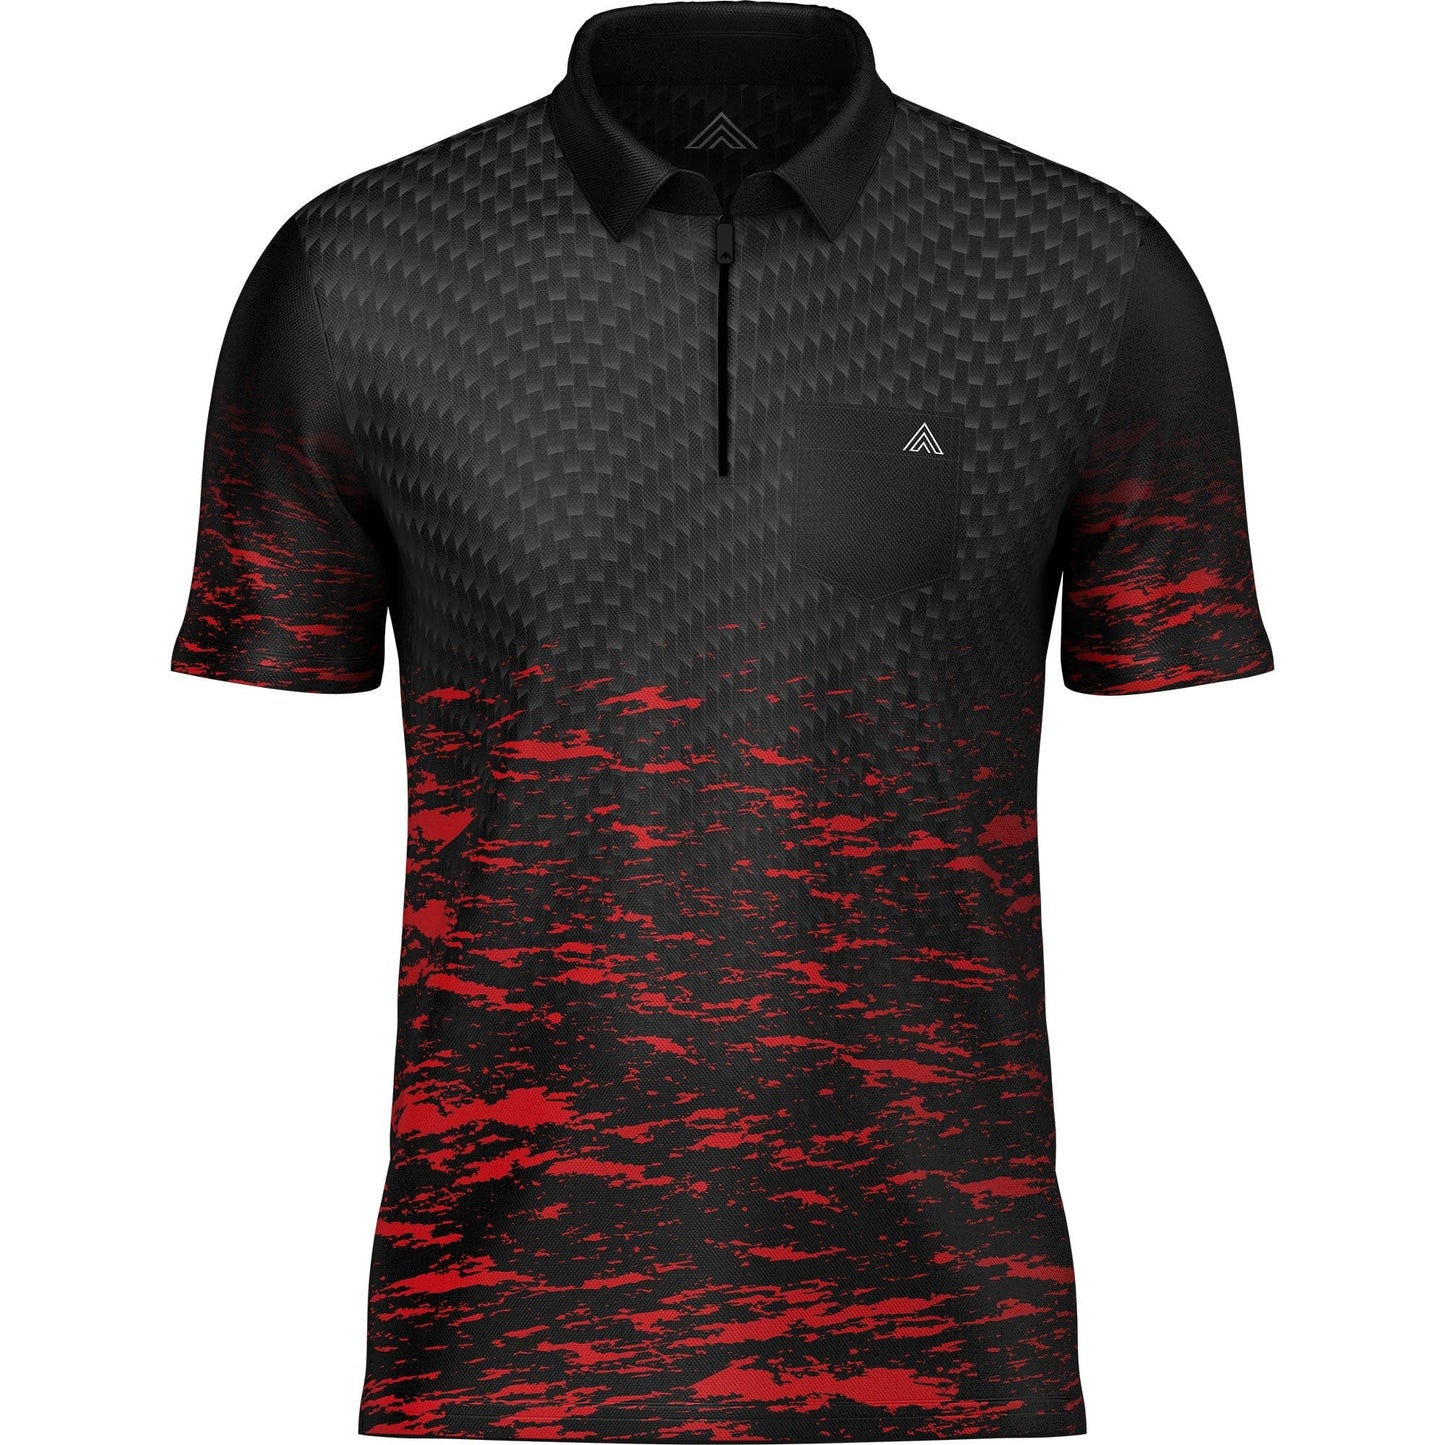 Arraz Lava Dart Shirt - with Pocket - Black & Red